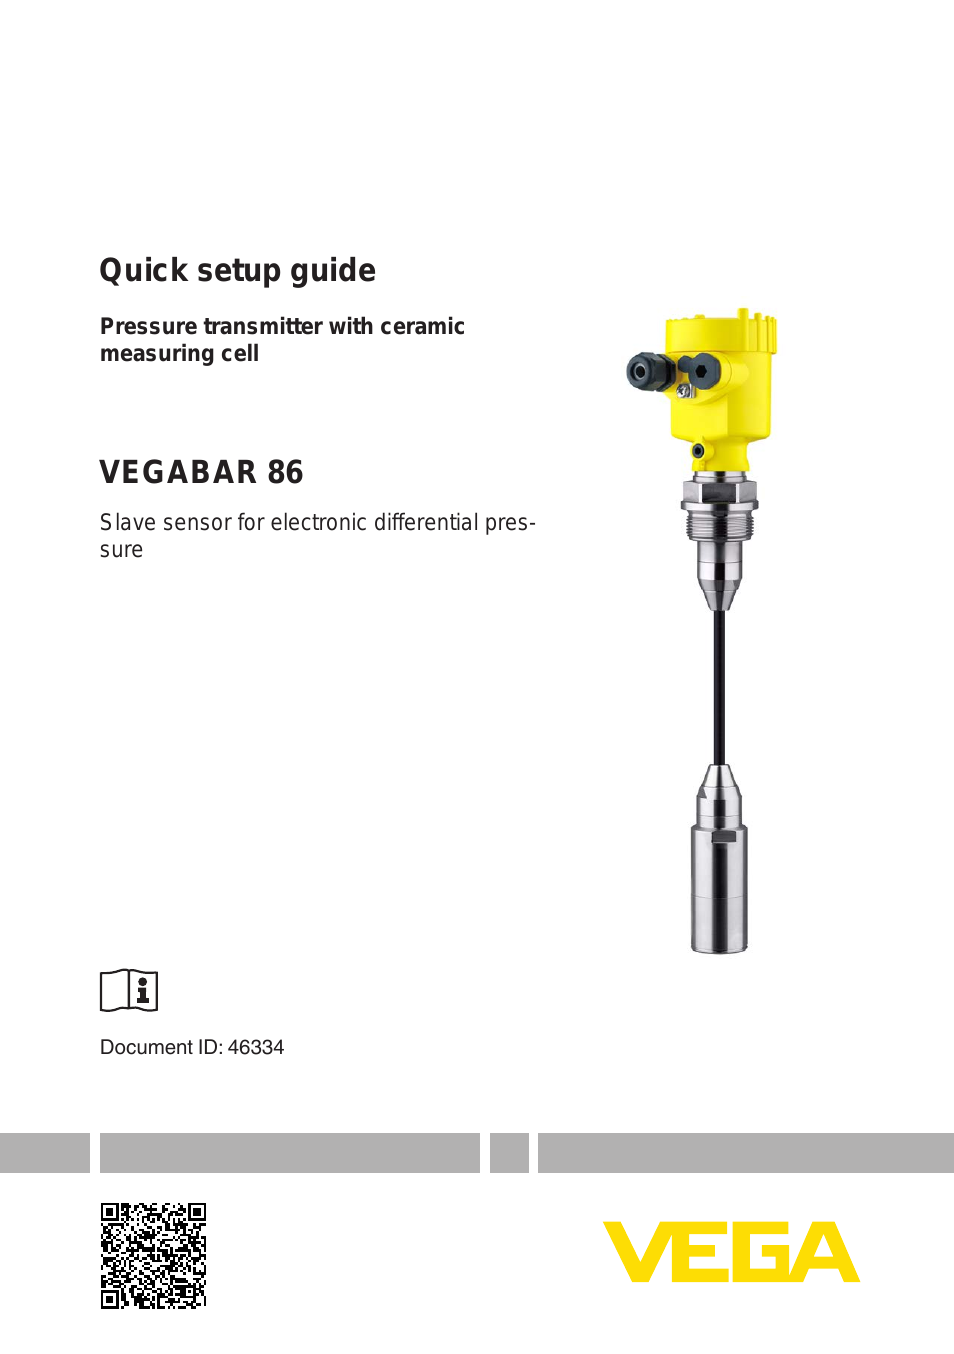 VEGABAR 86 Save sensor - Quick setup guide